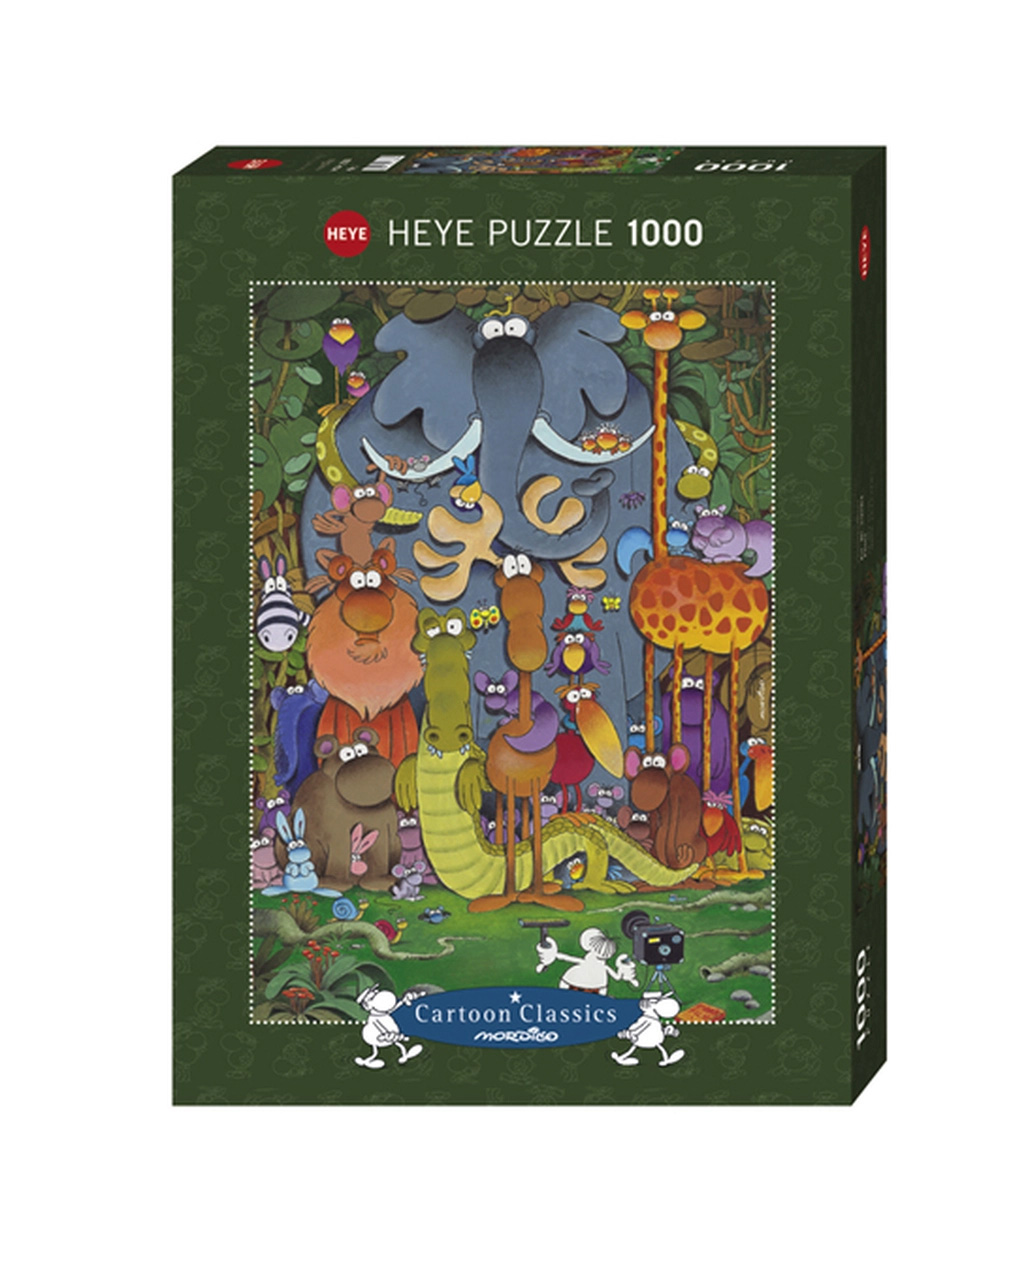 MORDILLO Heye Puzzle 29799-1000 Teile Pcs. WILDLIFE 